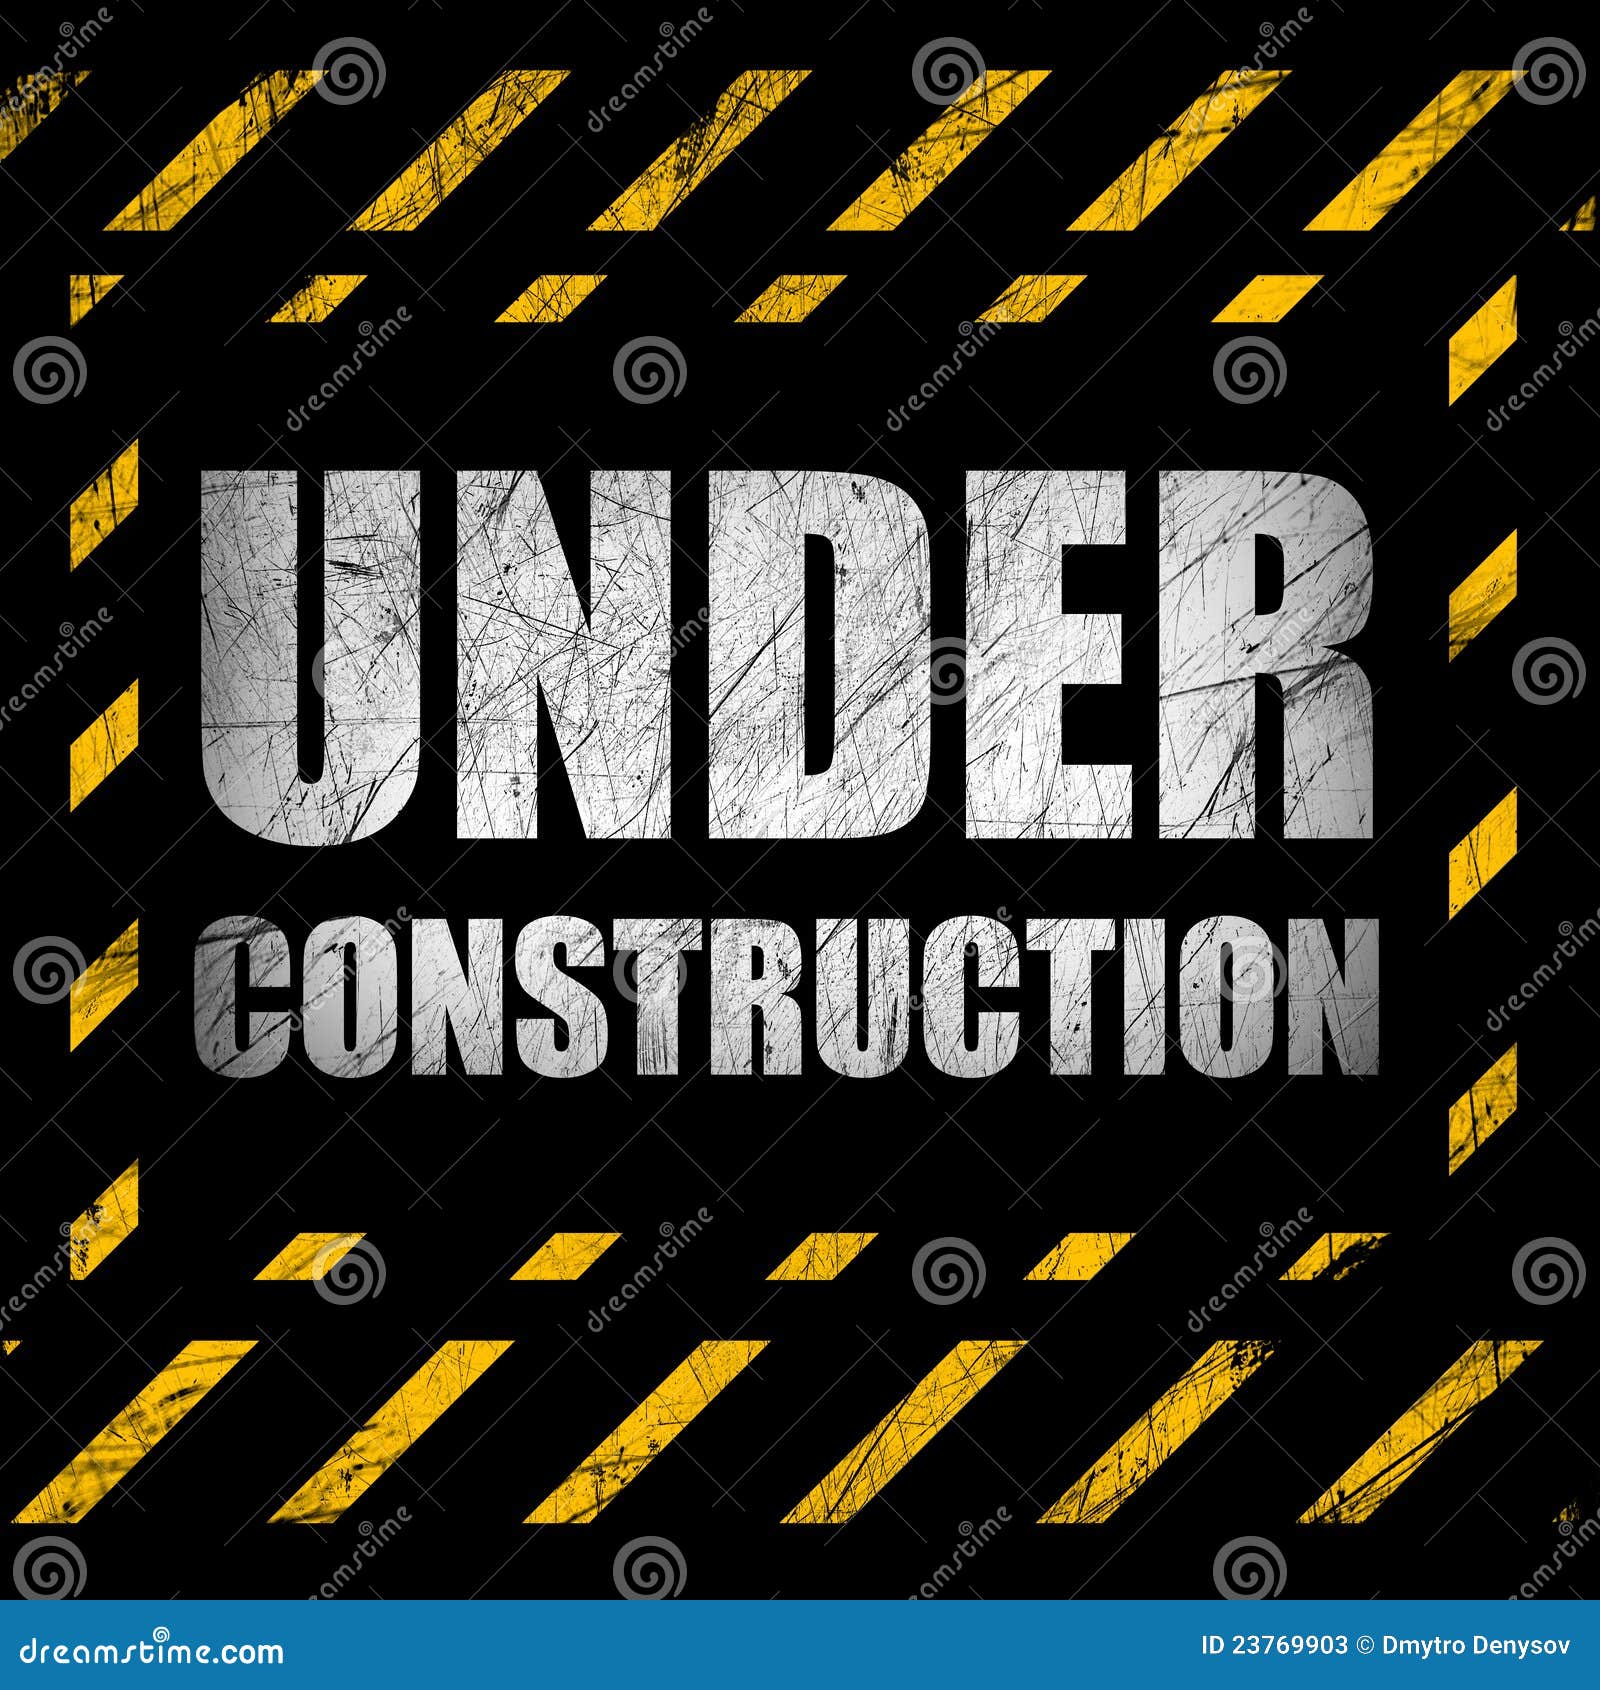 Under Construction Background Stock Illustration - Illustration of ...